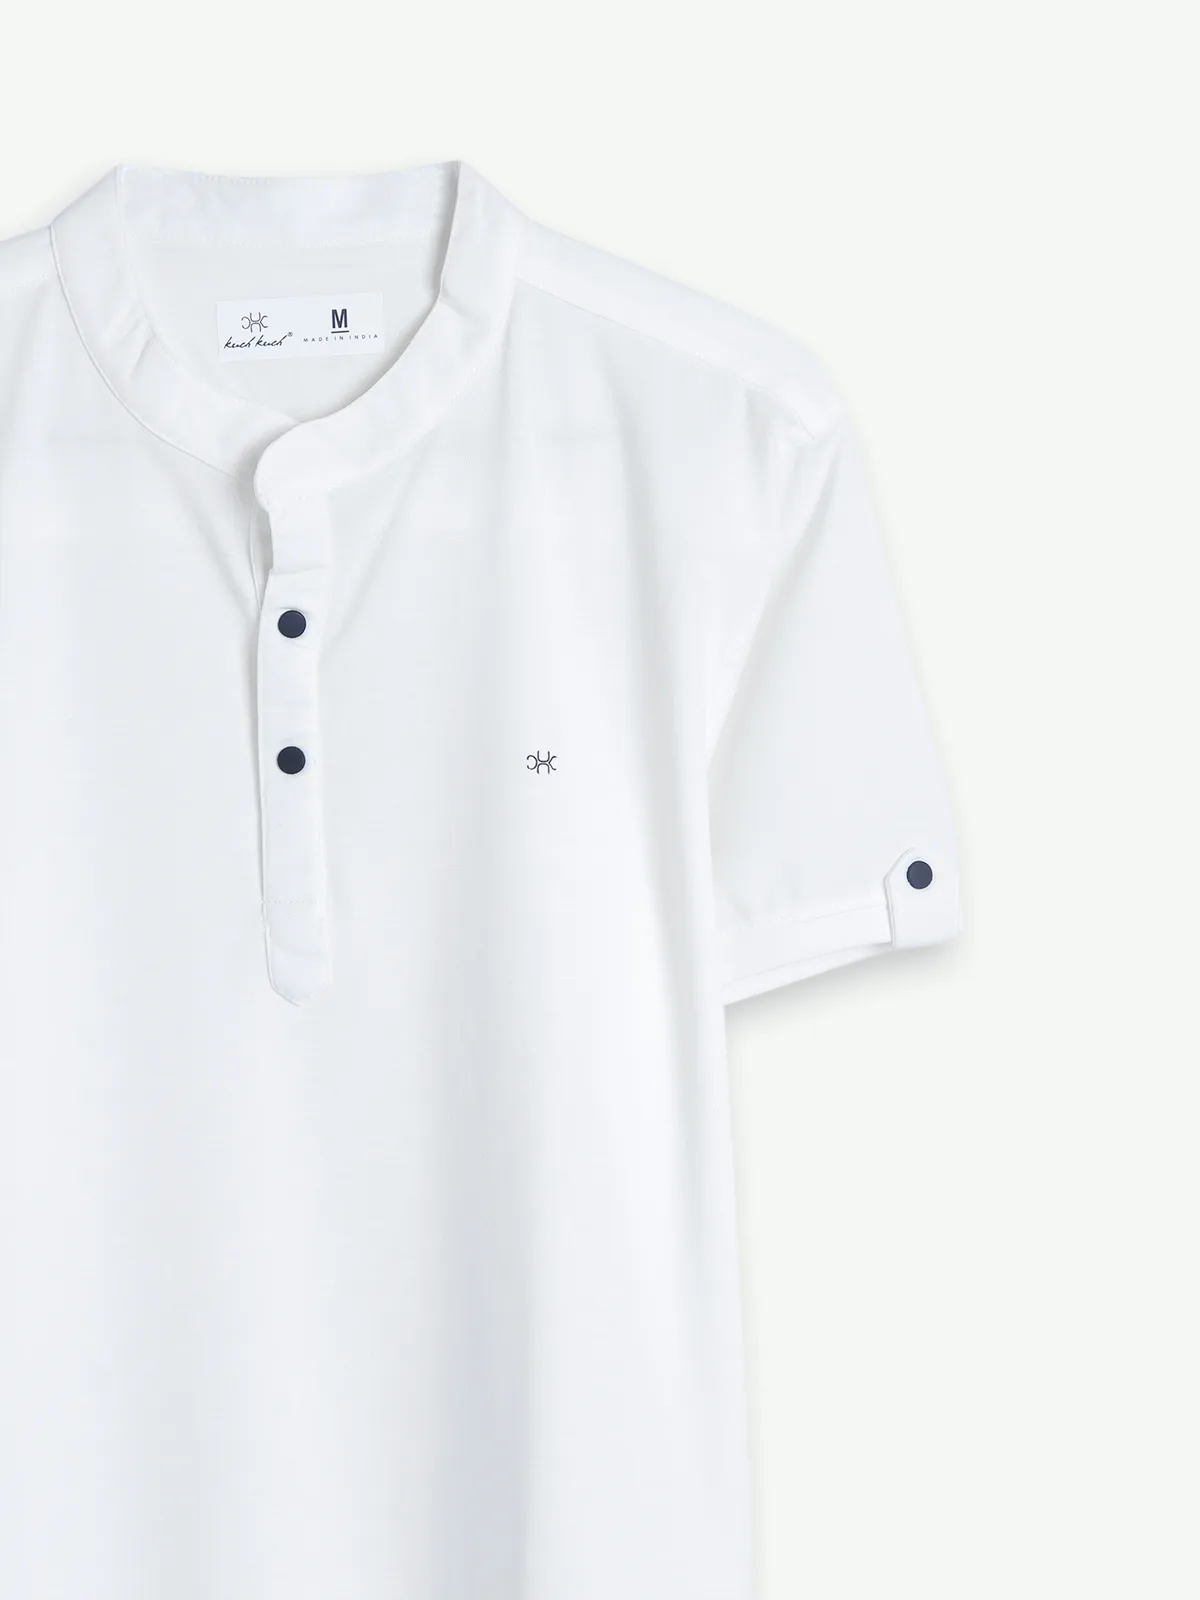 Kuch Kuch white cotton plain t shirt